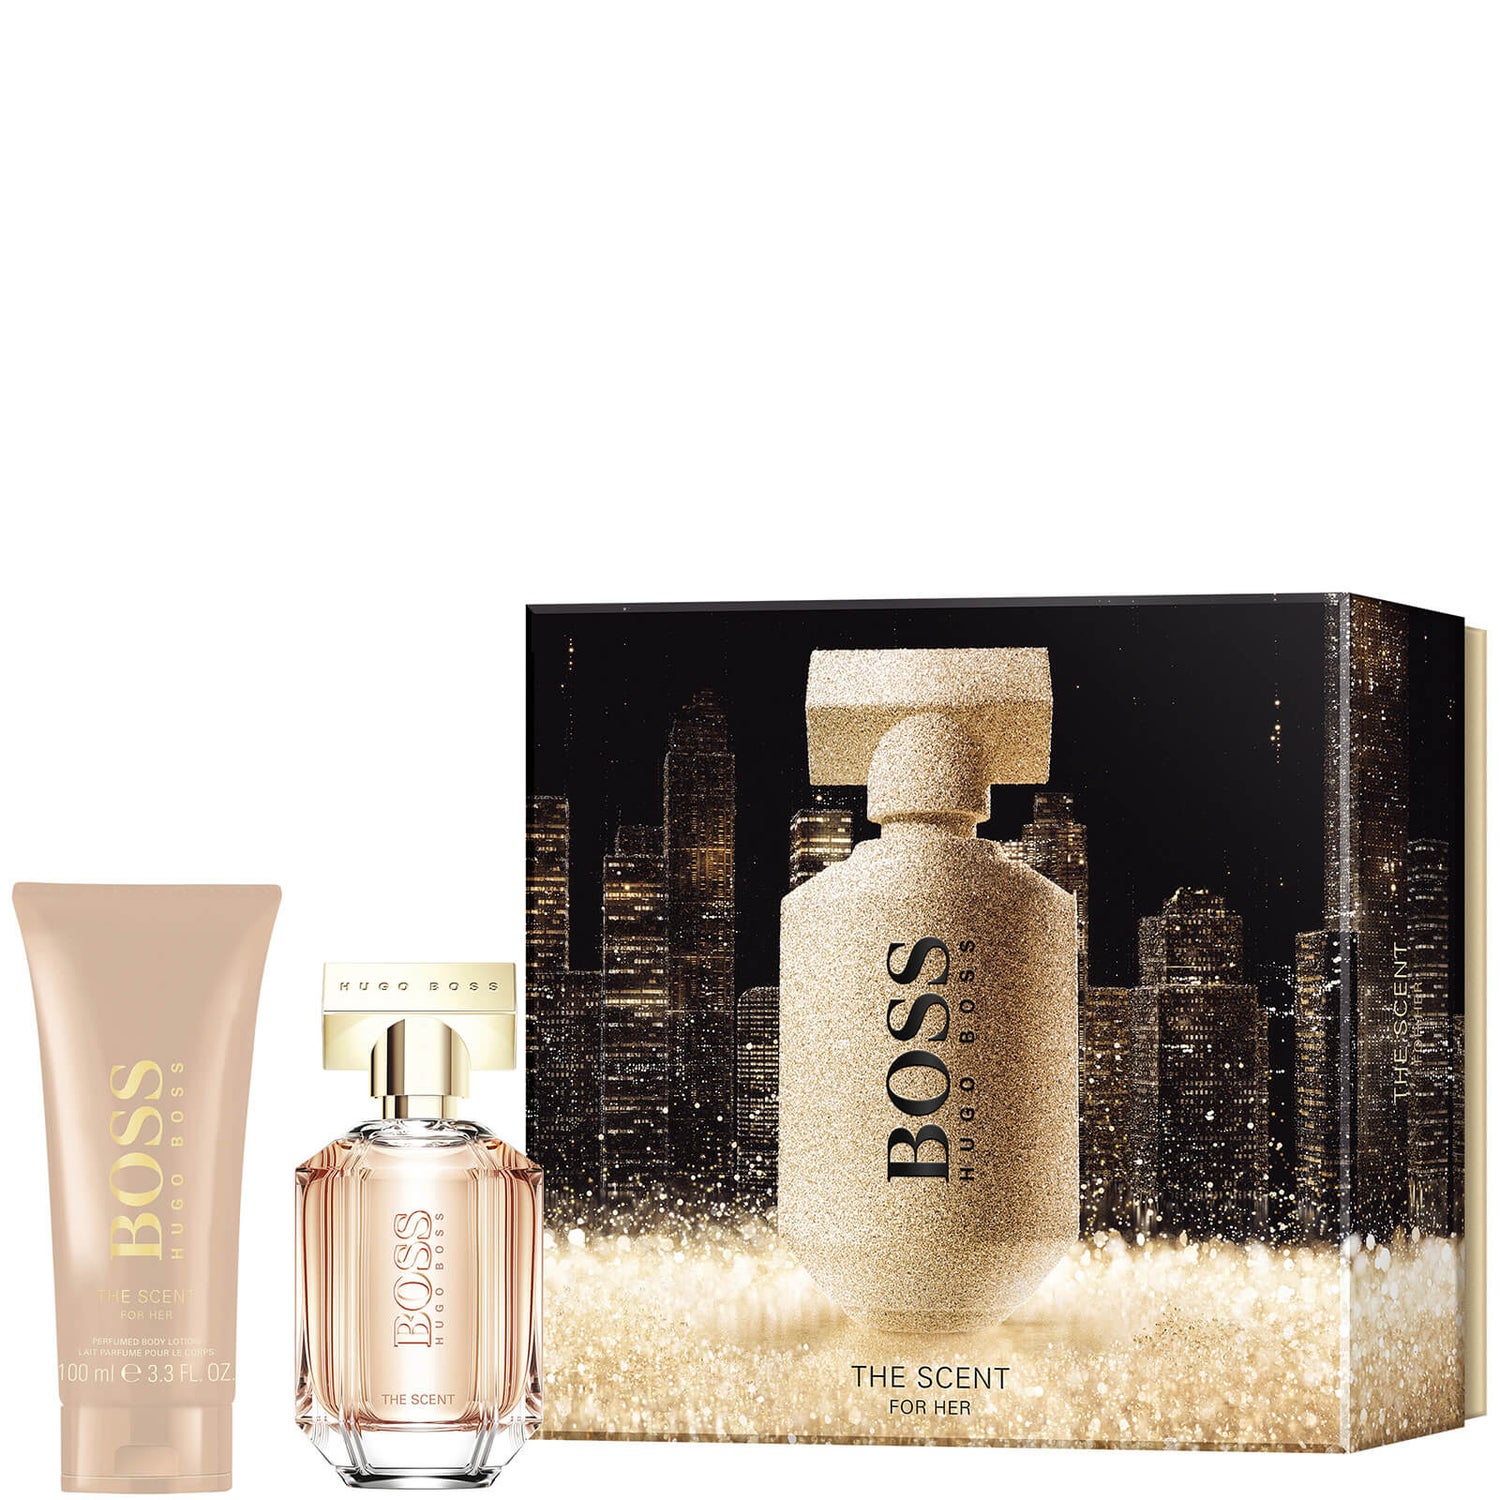 HUGO BOSS The Scent For Her Eau de Parfum 50ml Gift Set